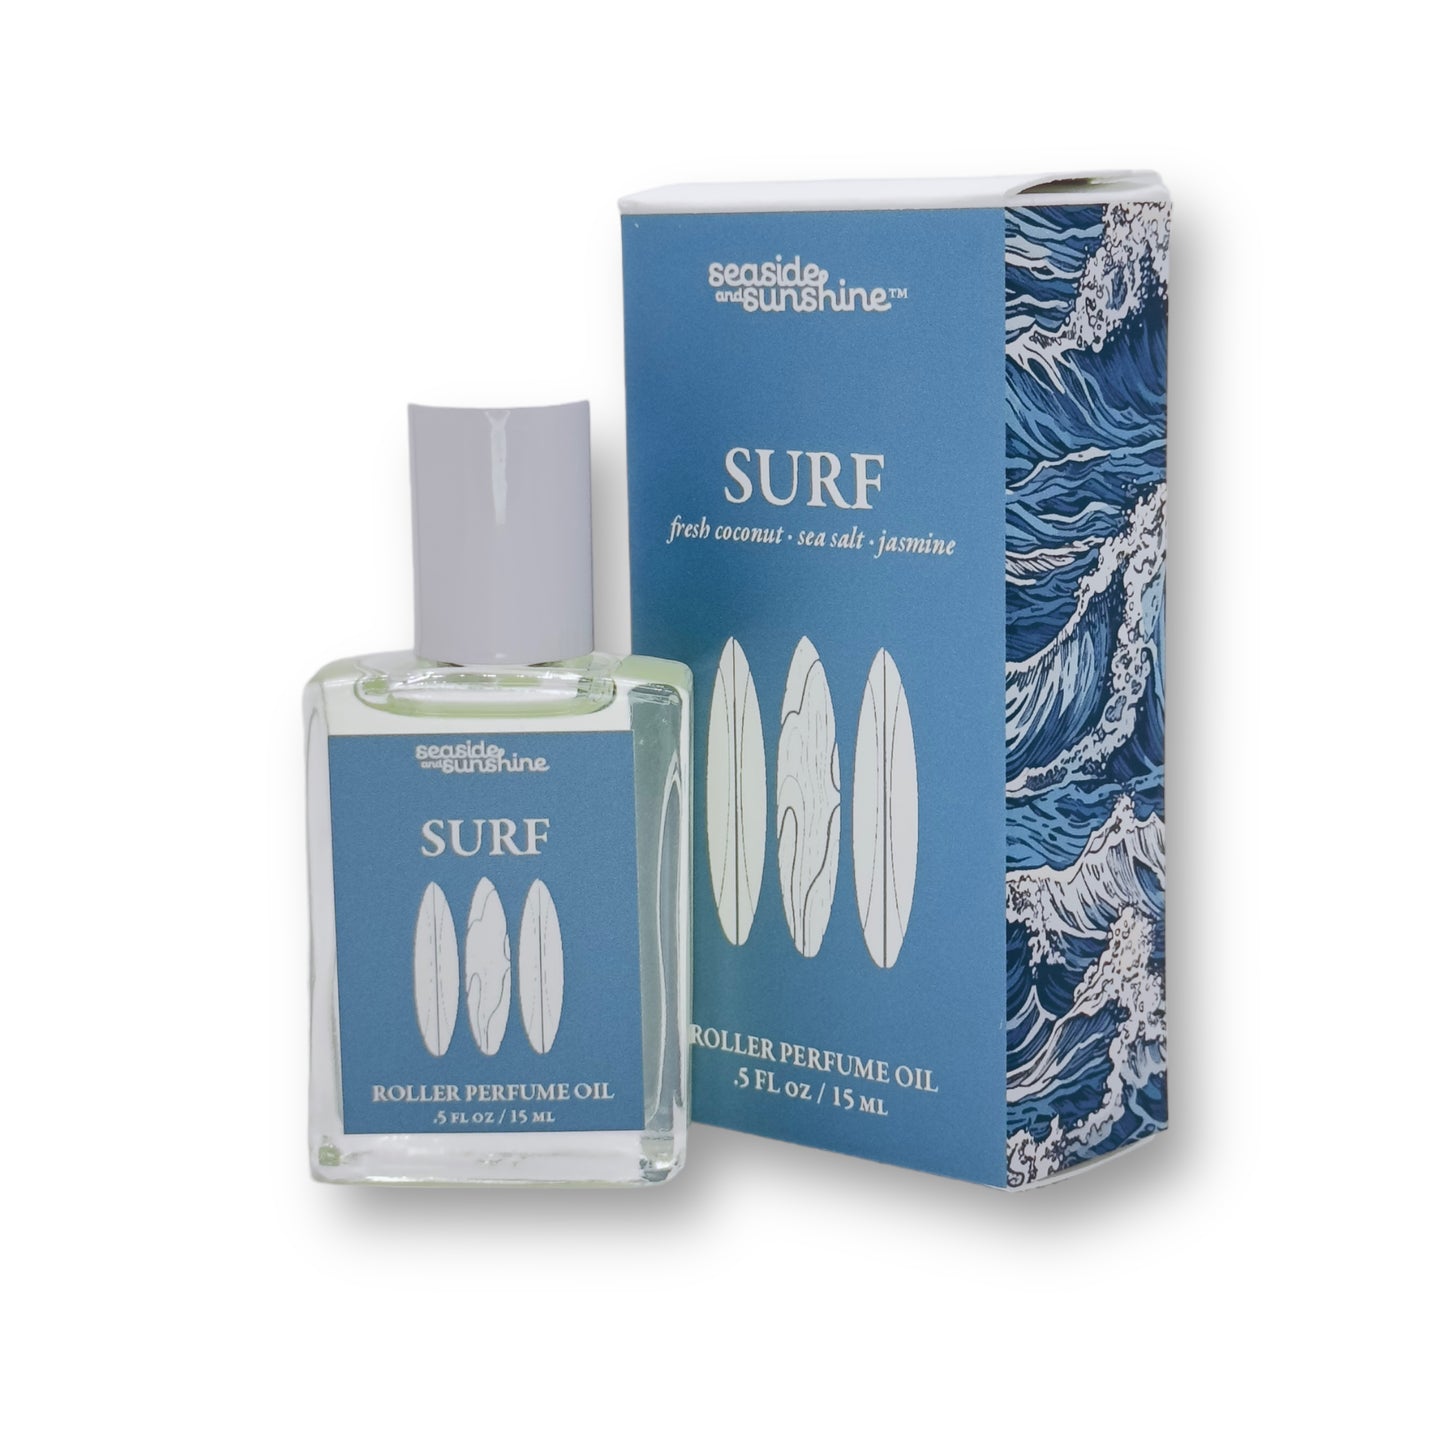 SURF Roller Perfume